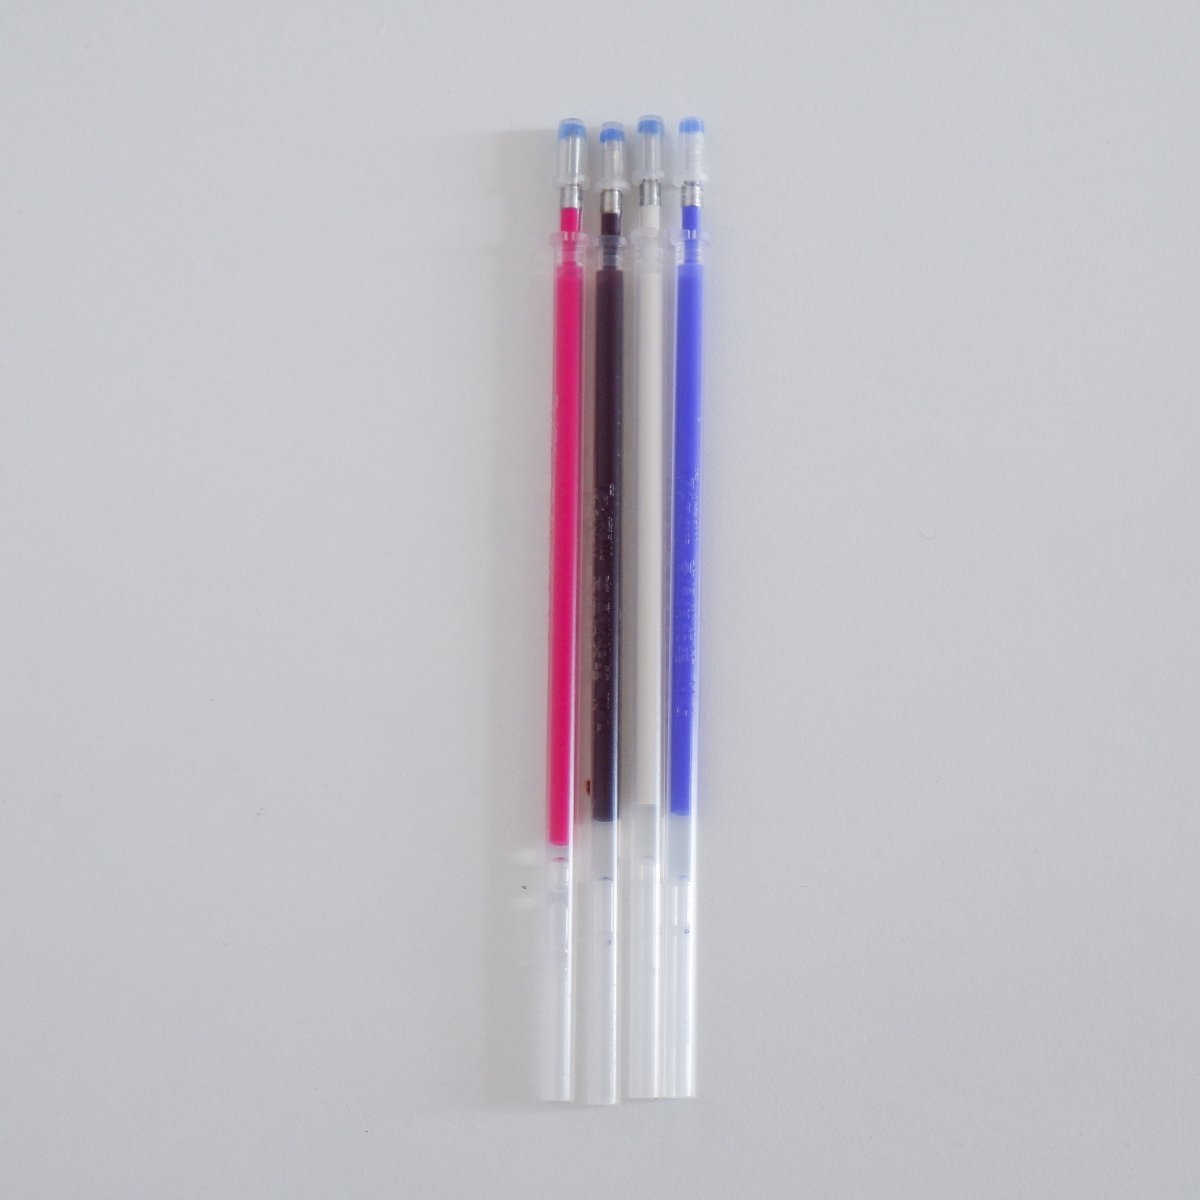  Heat Erasable Pens For Fabric